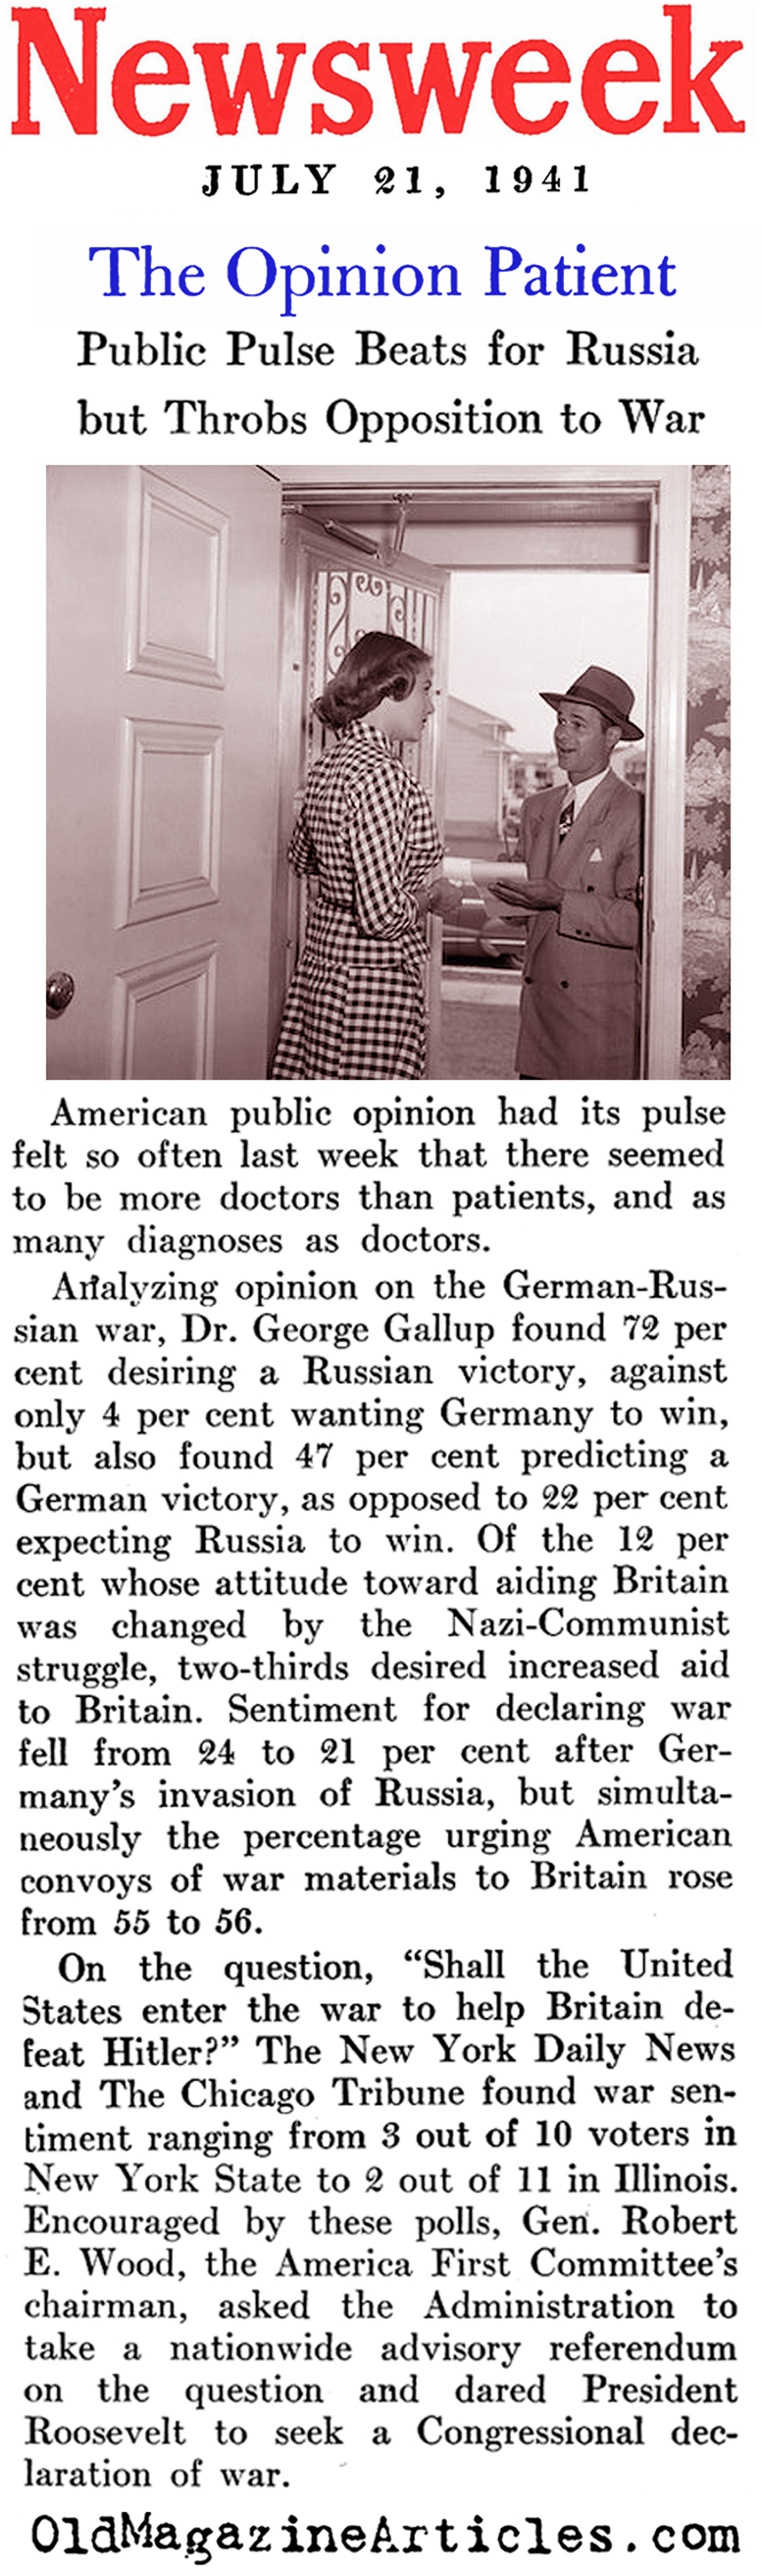 The War and Public Opinion (Newsweek Magazine, 1941)